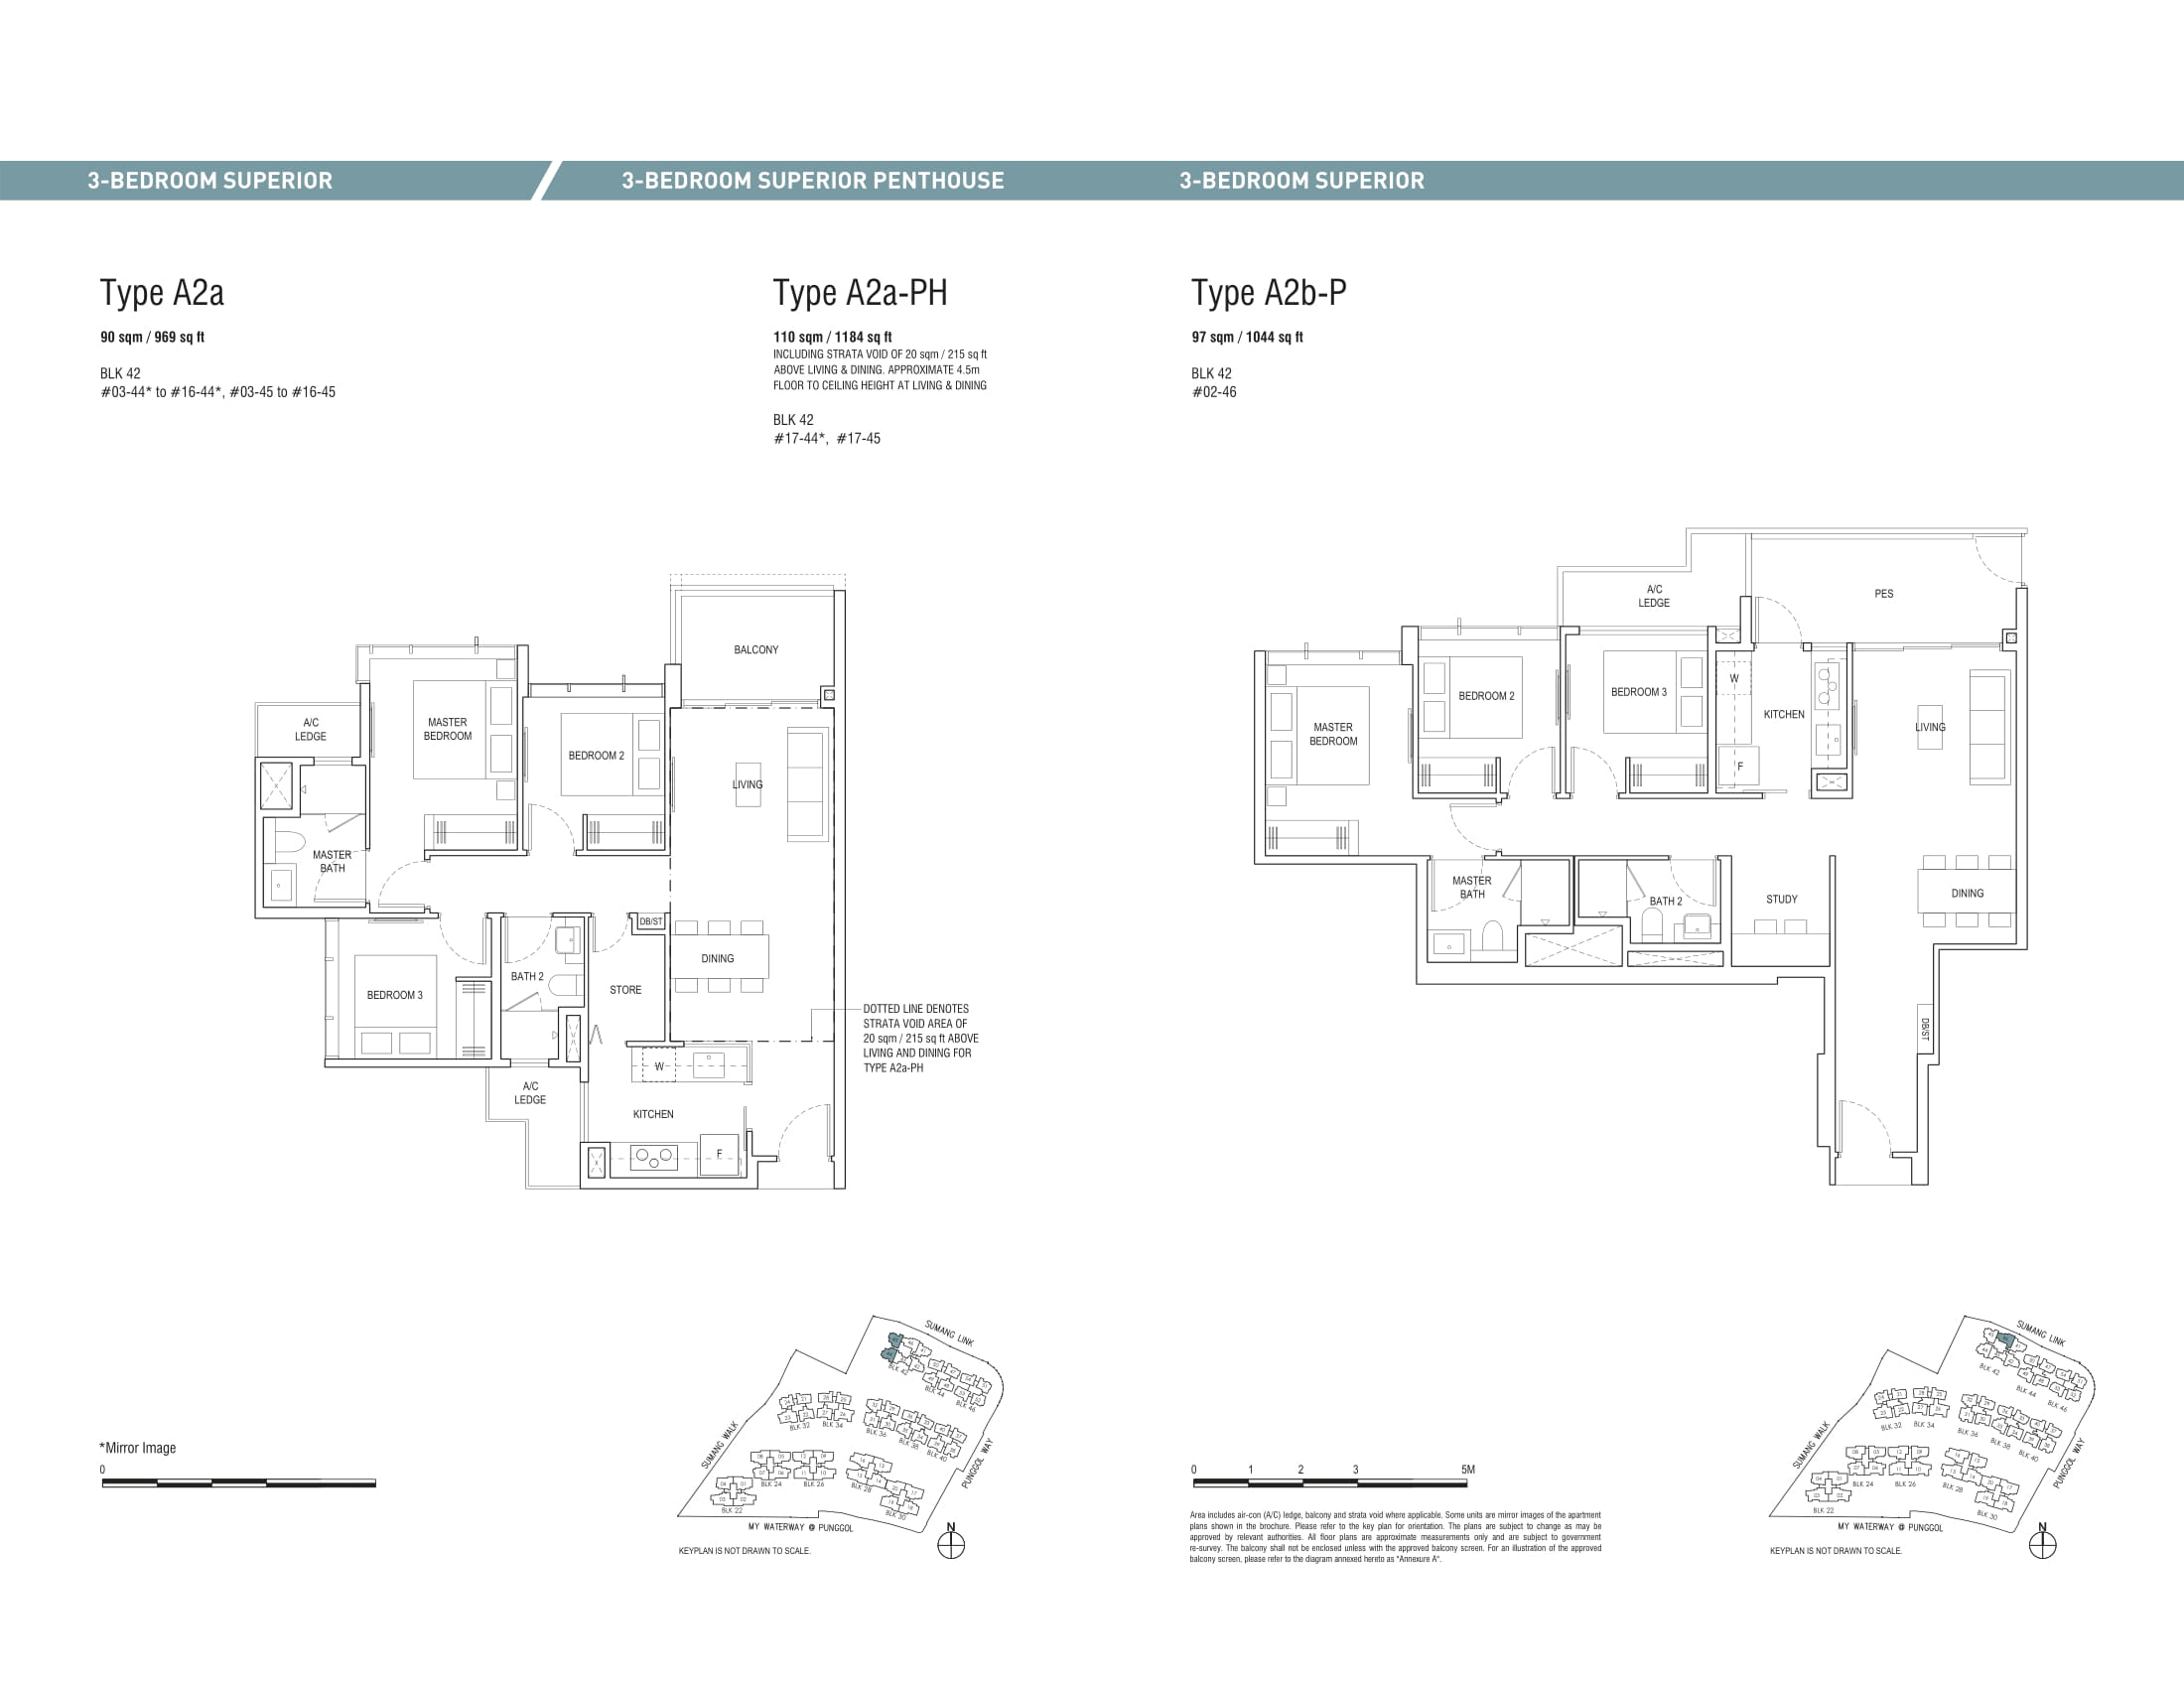 Piermont Grand EC's three-bedroom superior and three-bedroom superior penthouse types